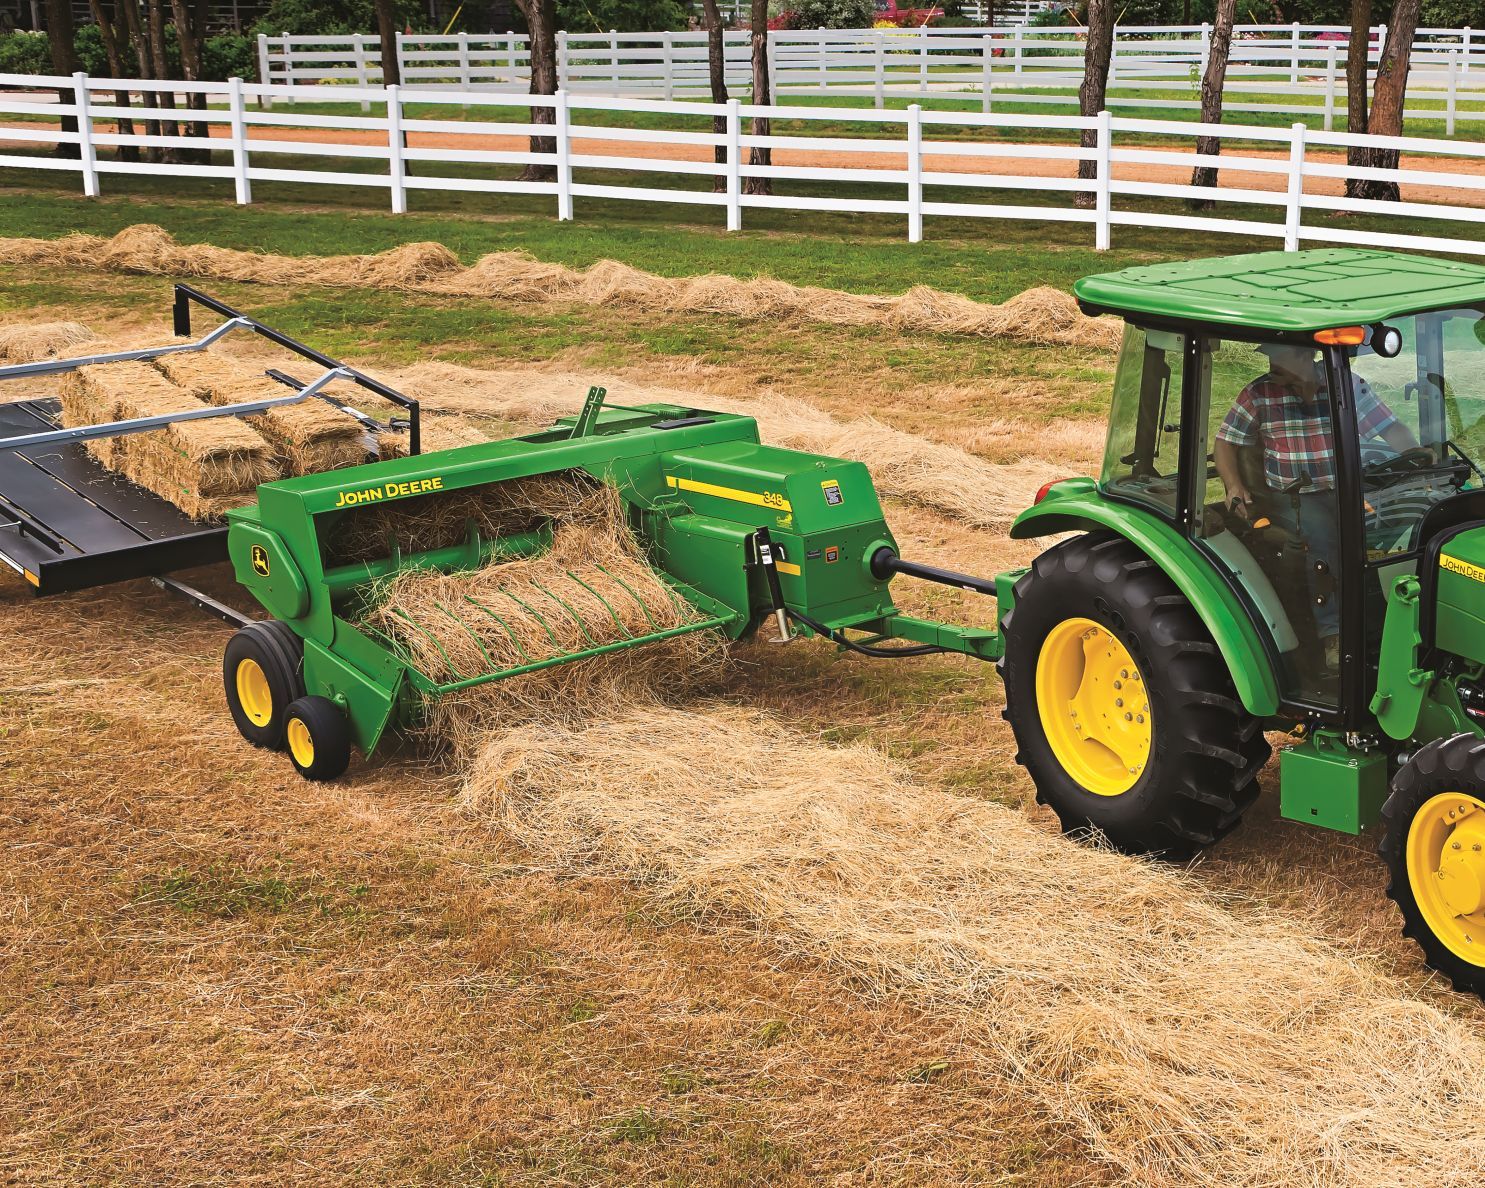 John Deere tractor pulls a John Deere small square hay baler